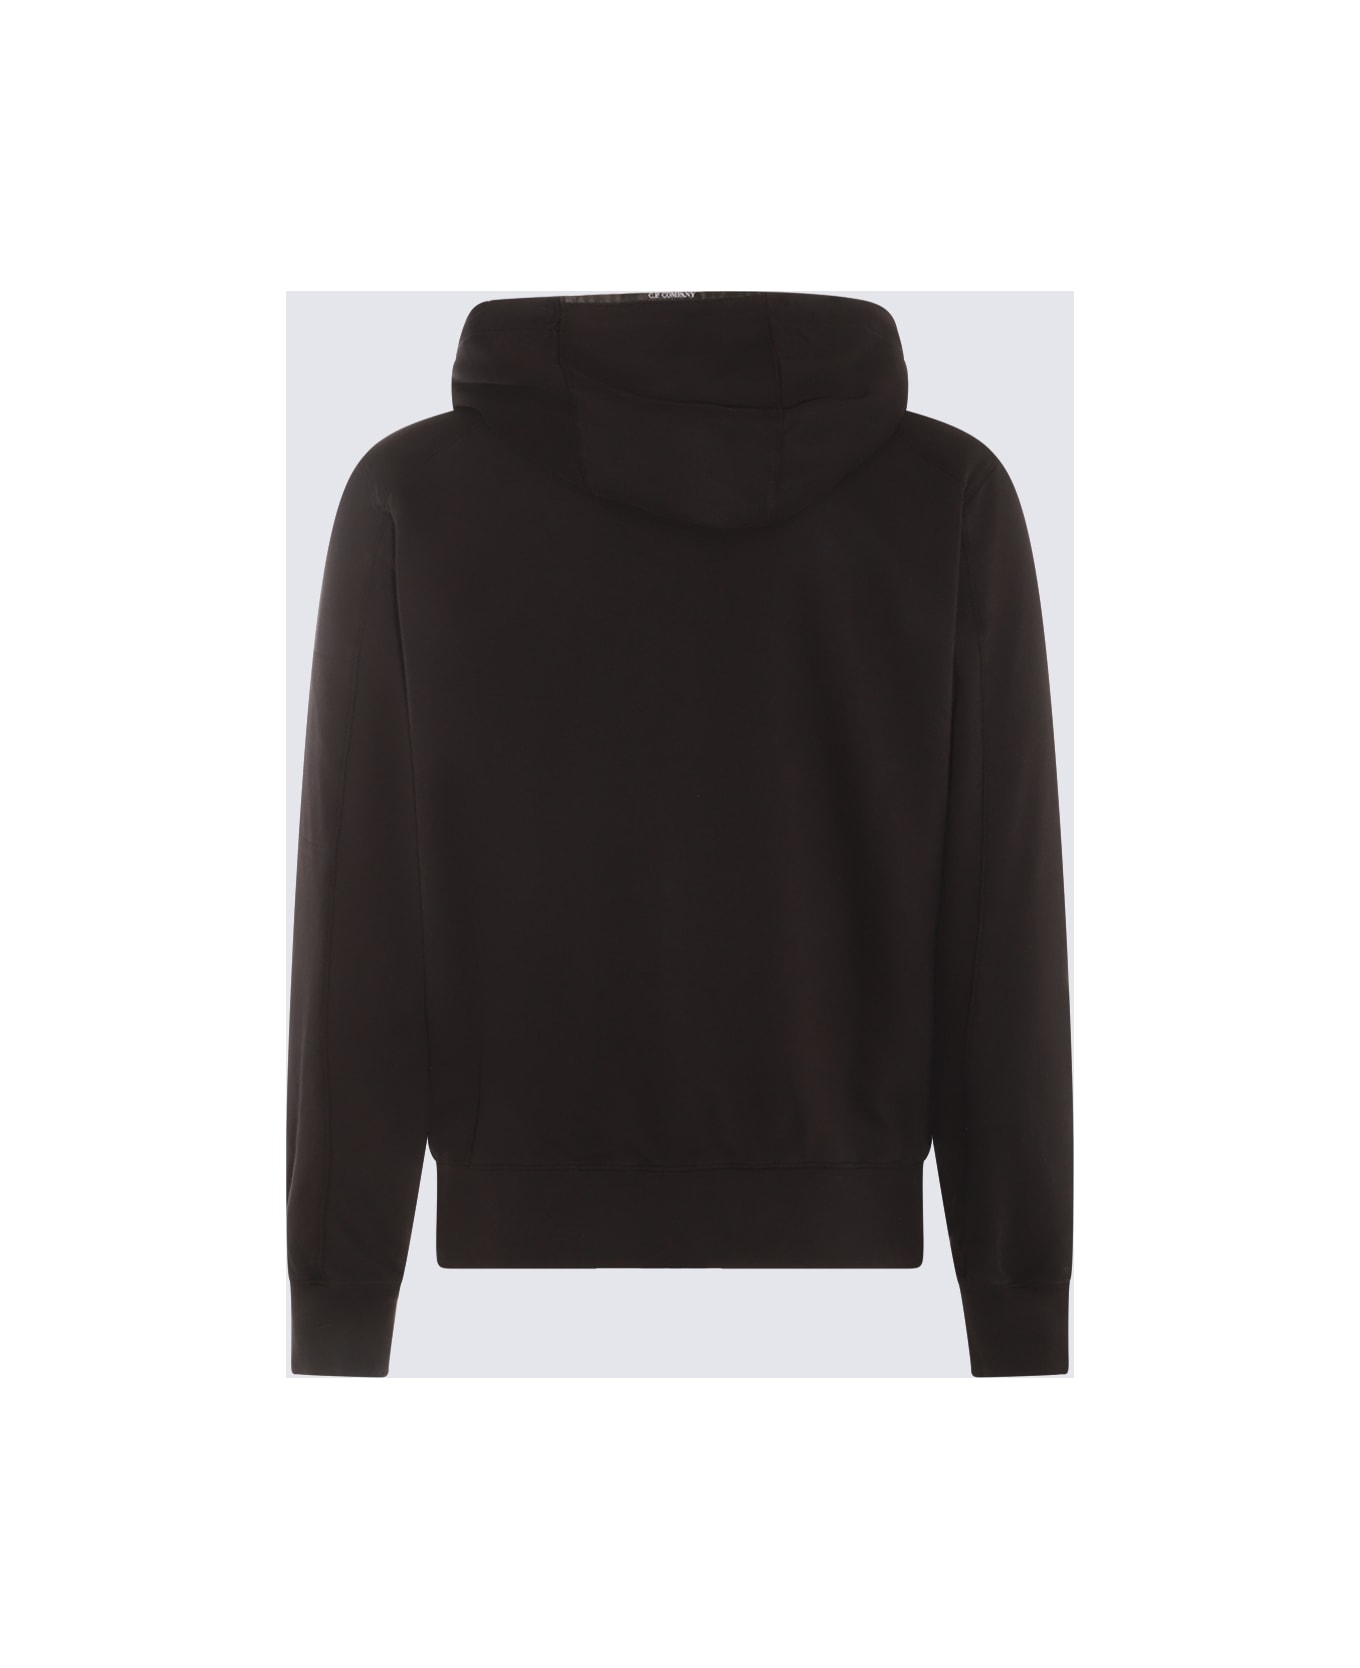 C.P. Company Black Cotton Sweatshirt - Black ニットウェア